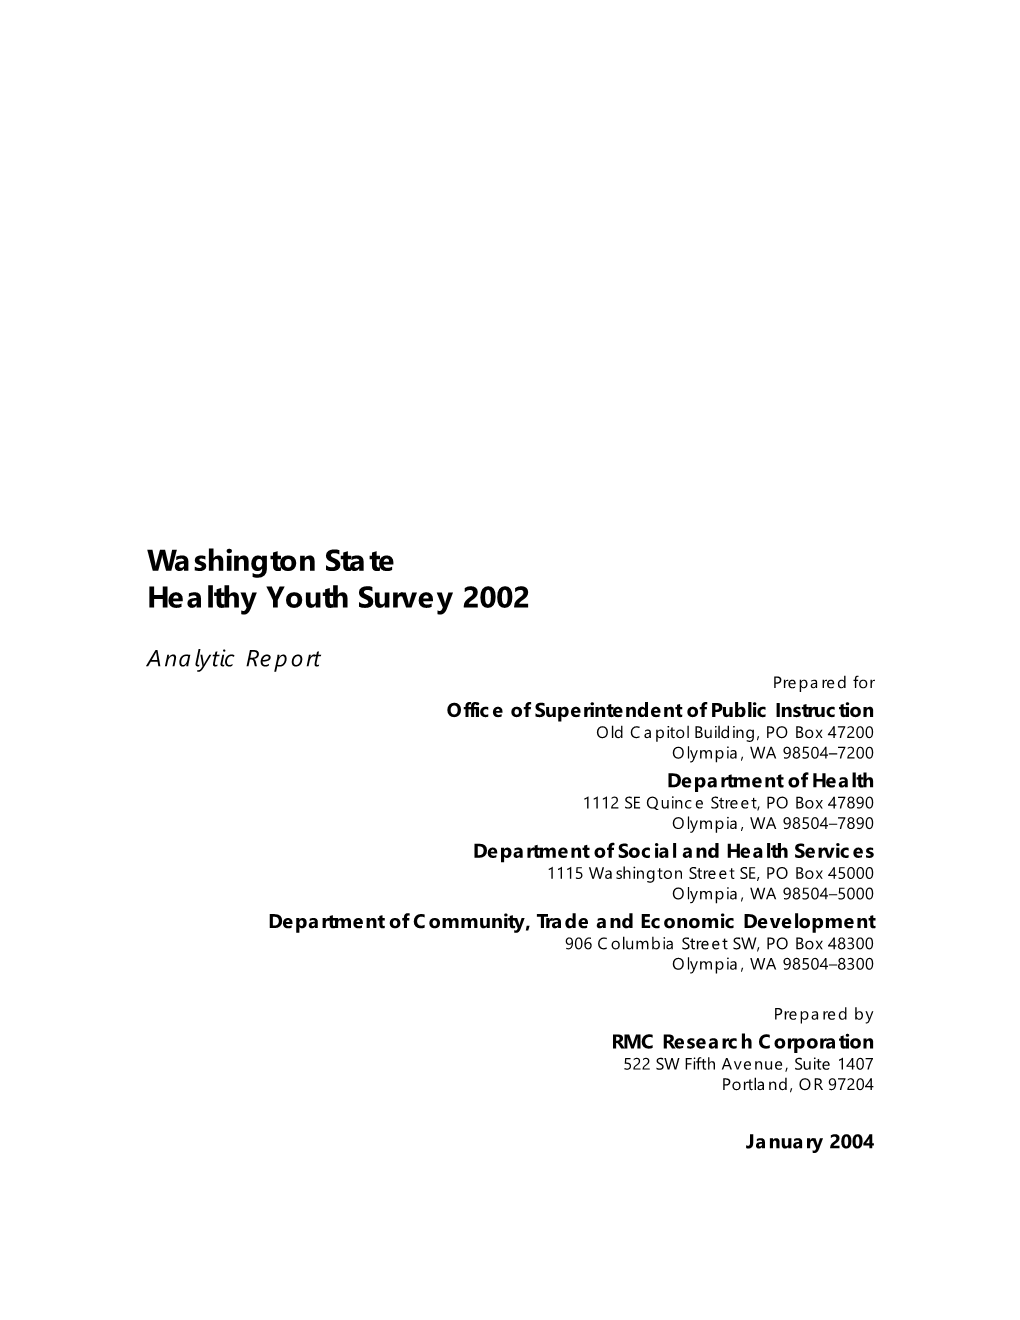 2002 Analytic Report